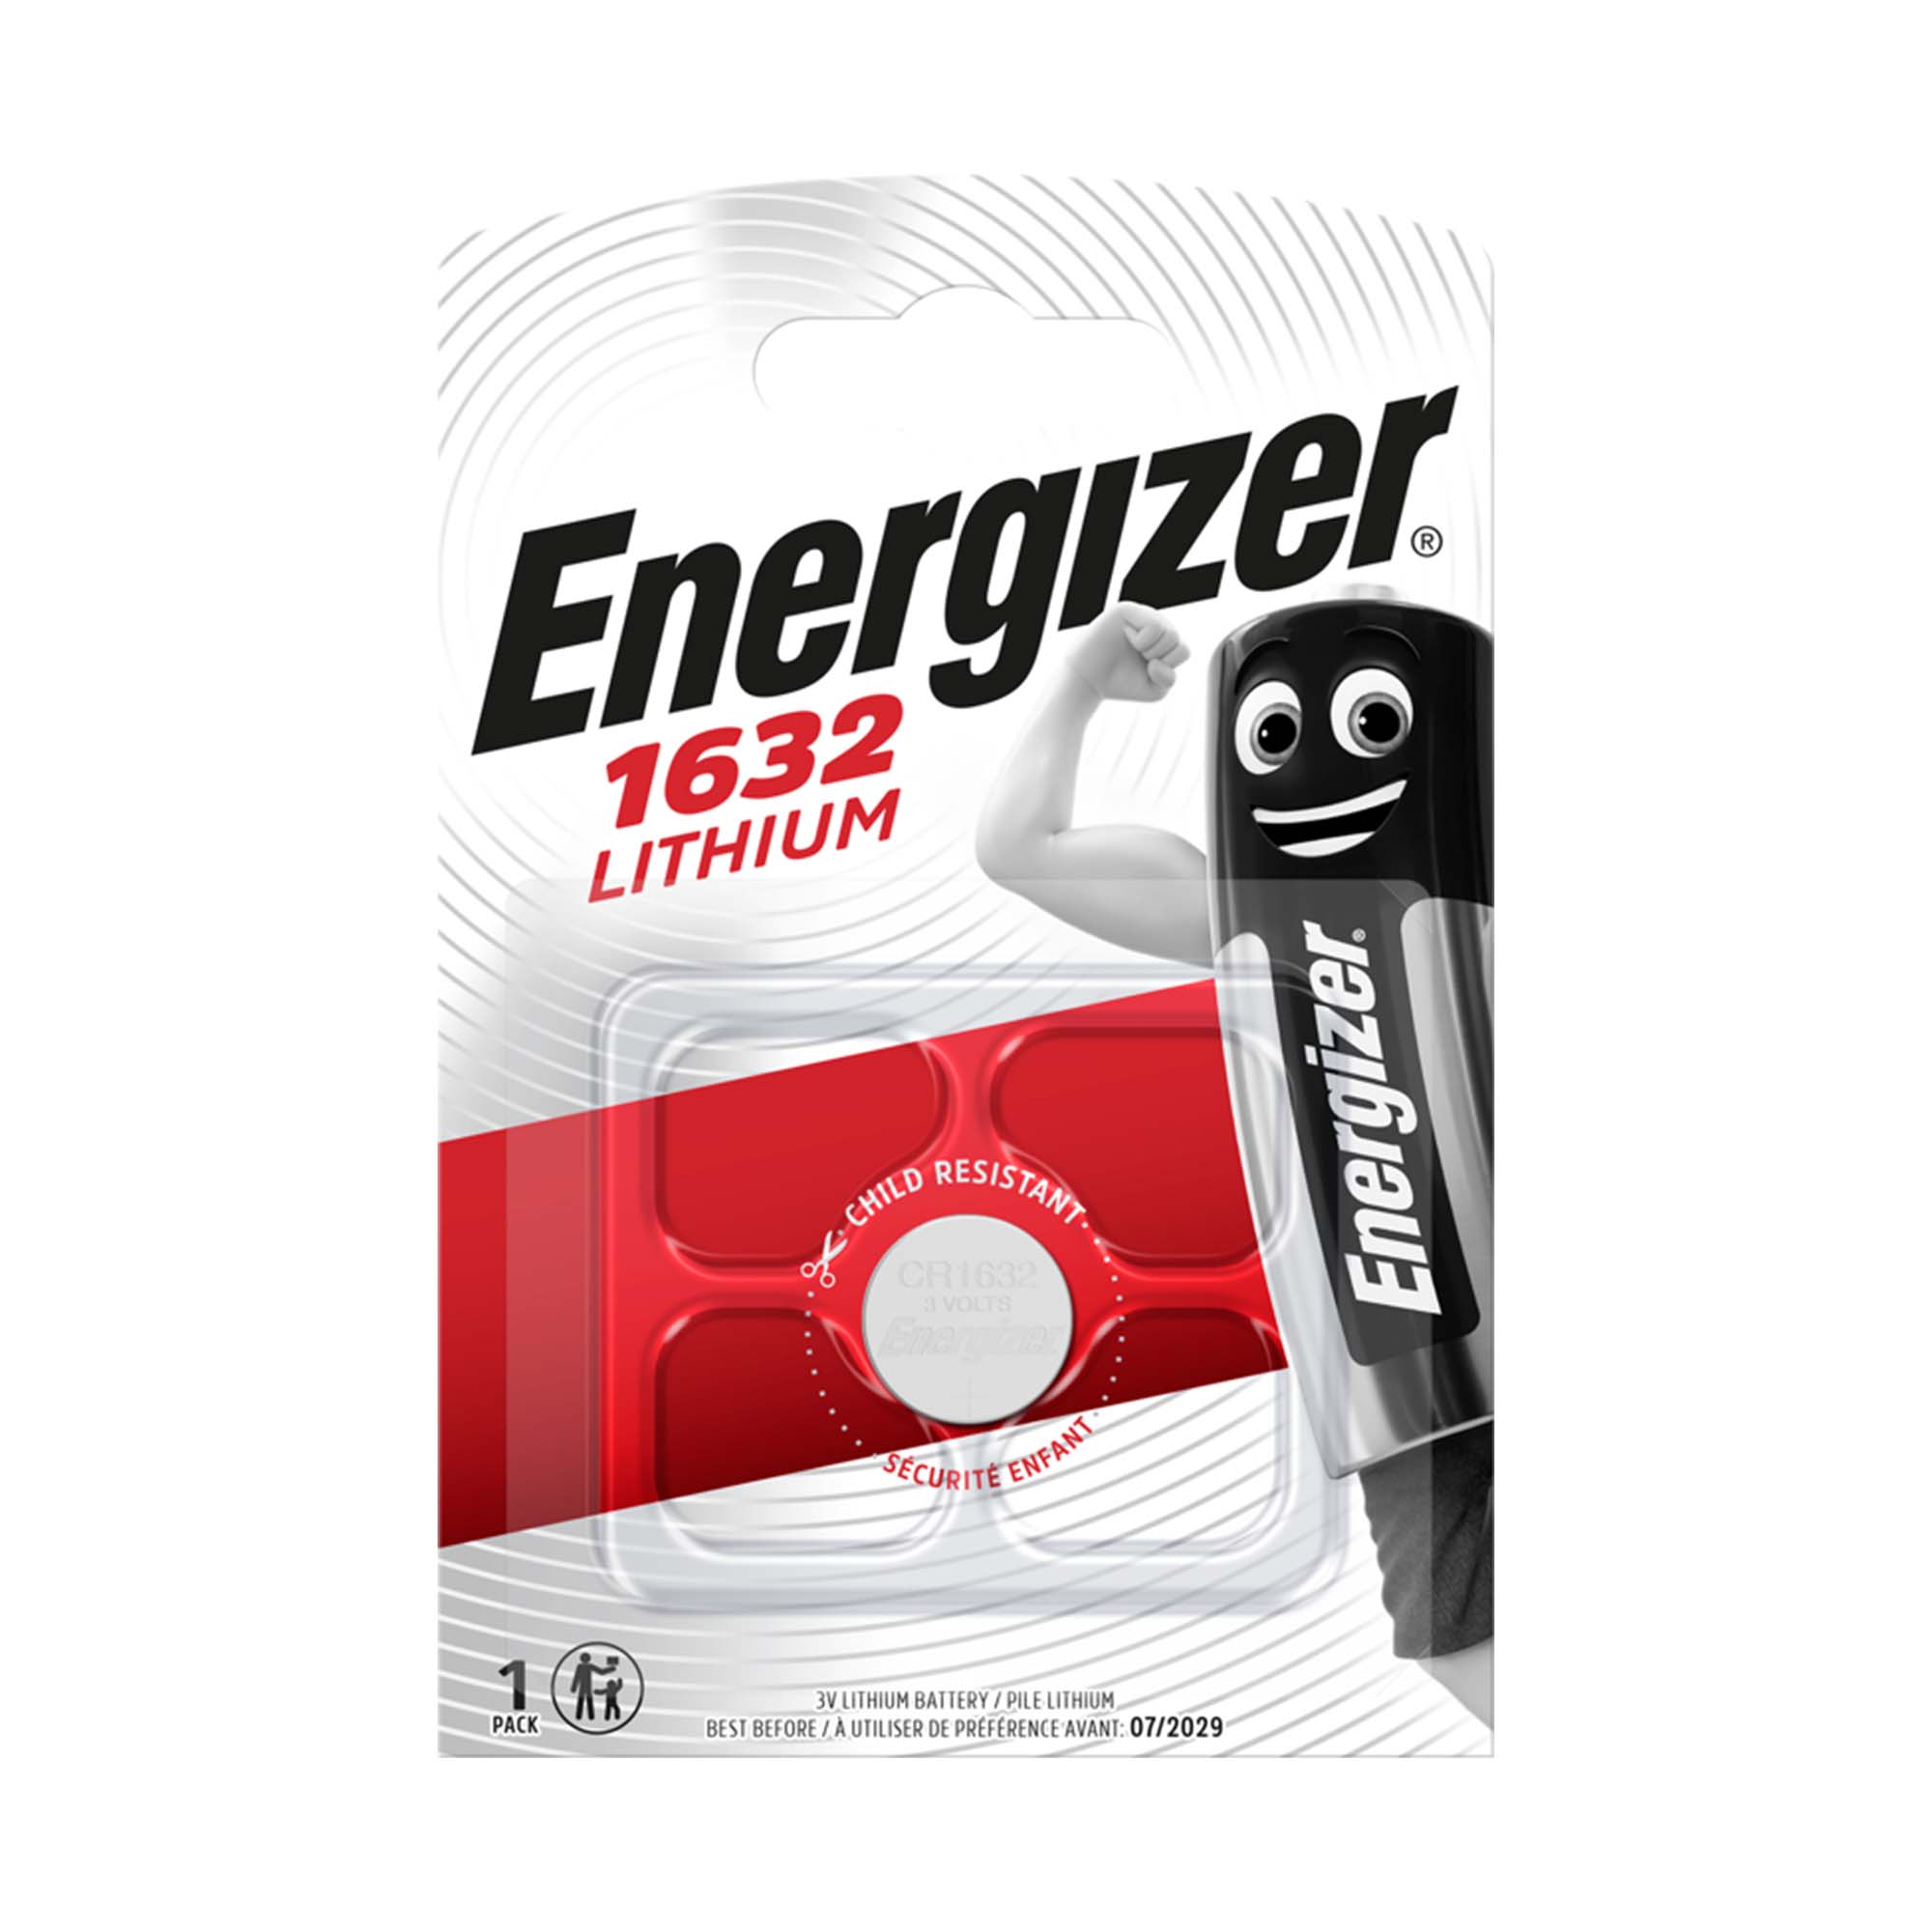 Energizer Lithium CR1632 1 pack